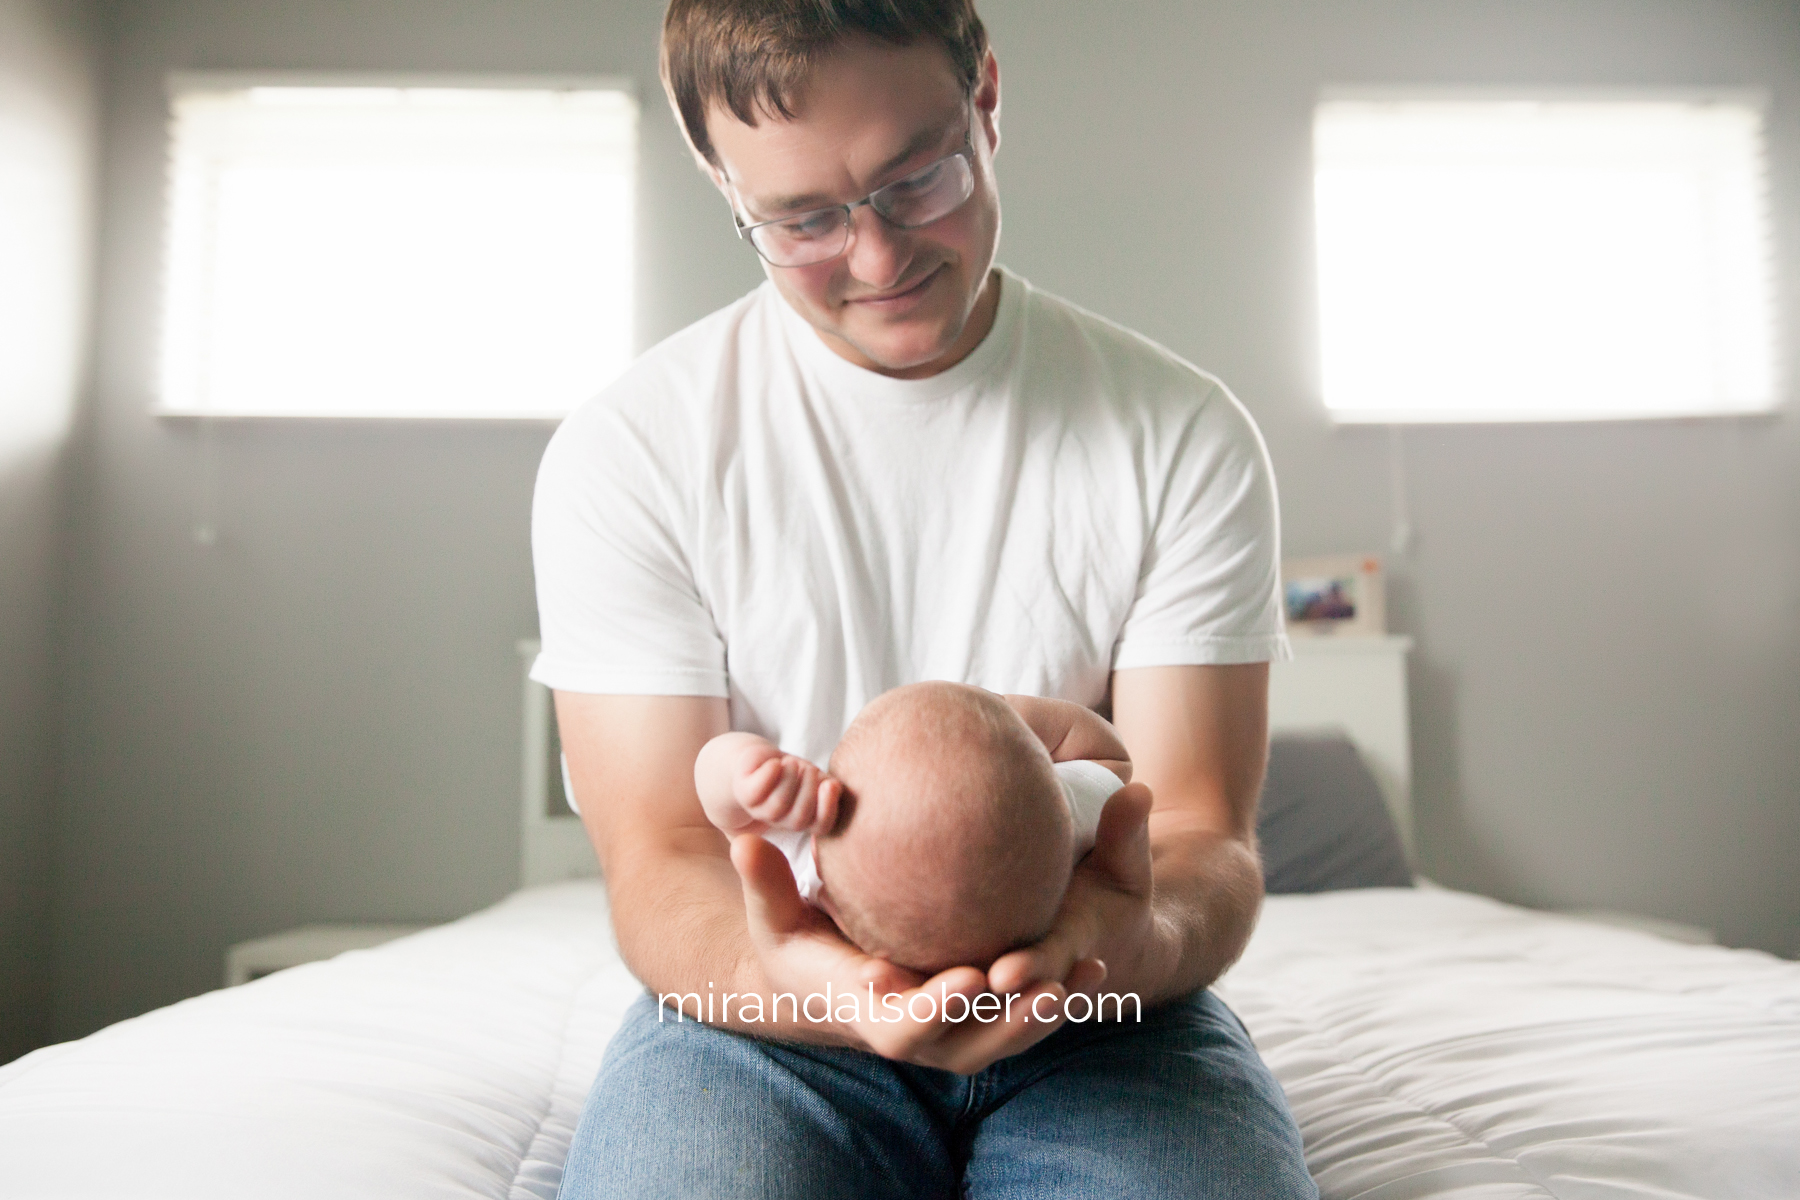 Newborn Photographers Fort Collins, Miranda L. Sober Photography, lifestyle baby photography